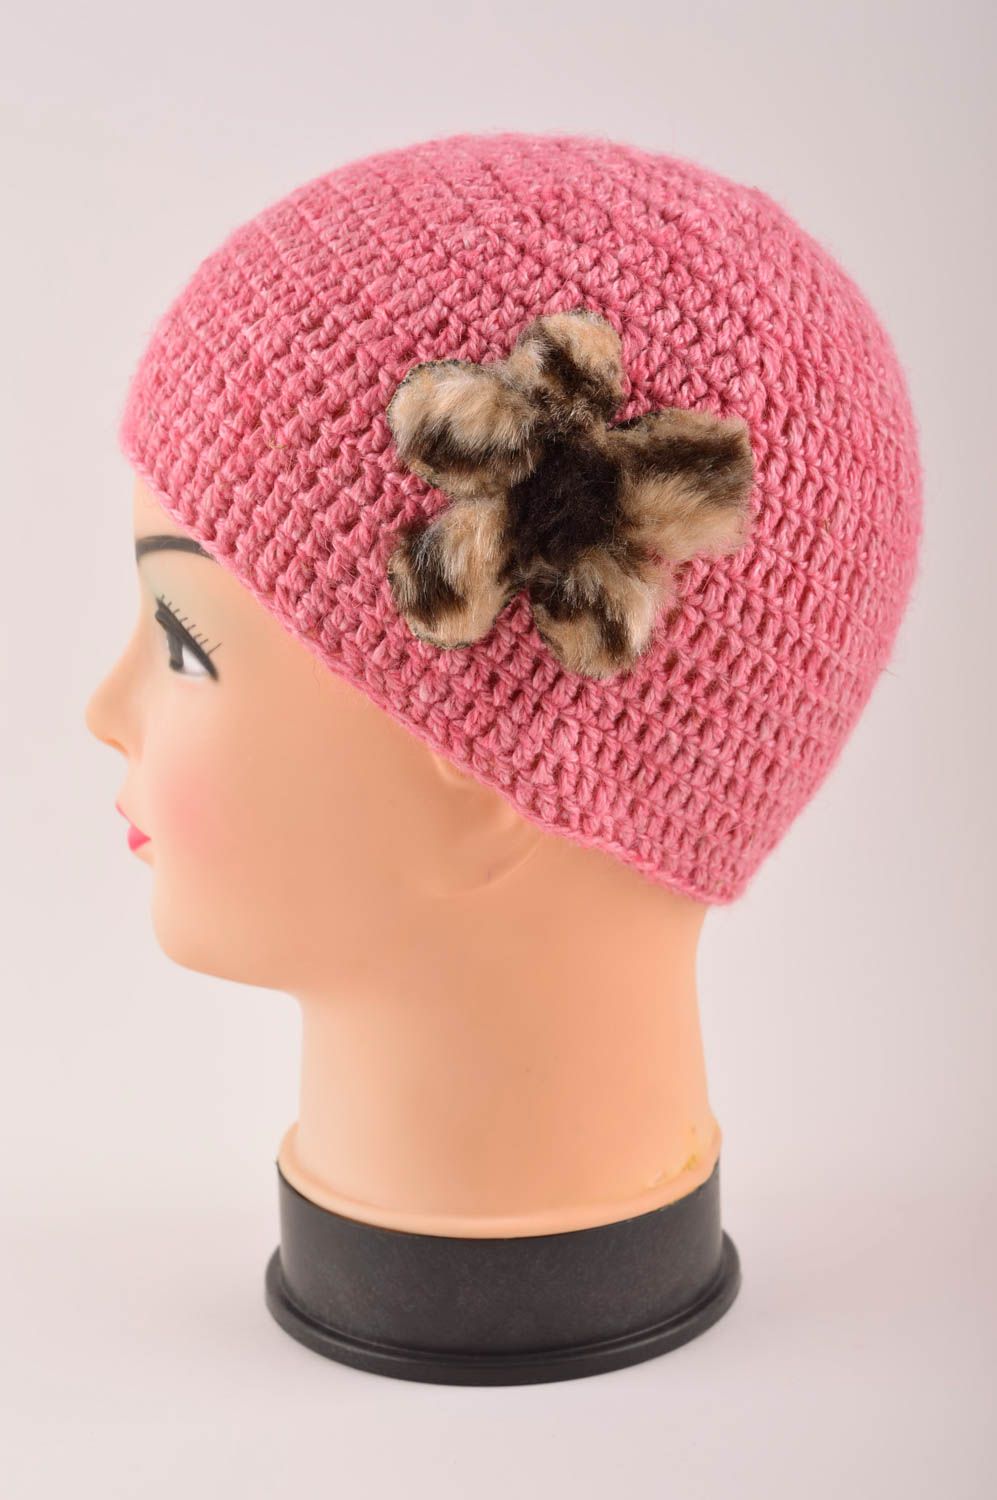 Handmade warm hat designer hat for baby unusual funny hat crocheted hat photo 3